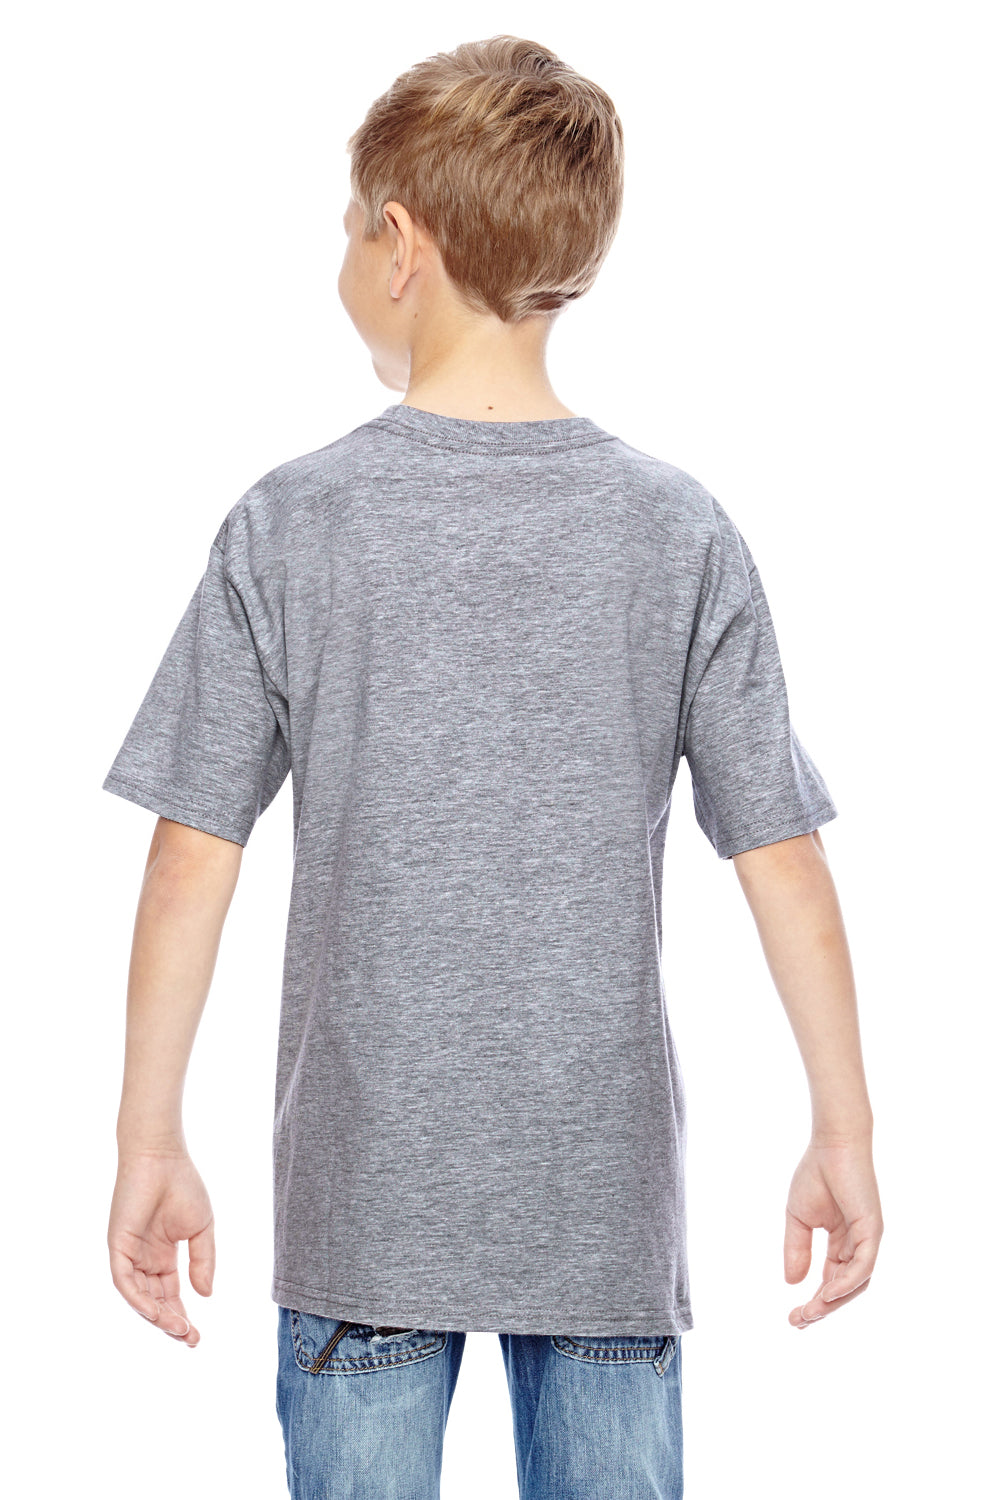 Hanes 498Y Youth Nano-T Short Sleeve Crewneck T-Shirt Light Steel Grey Back